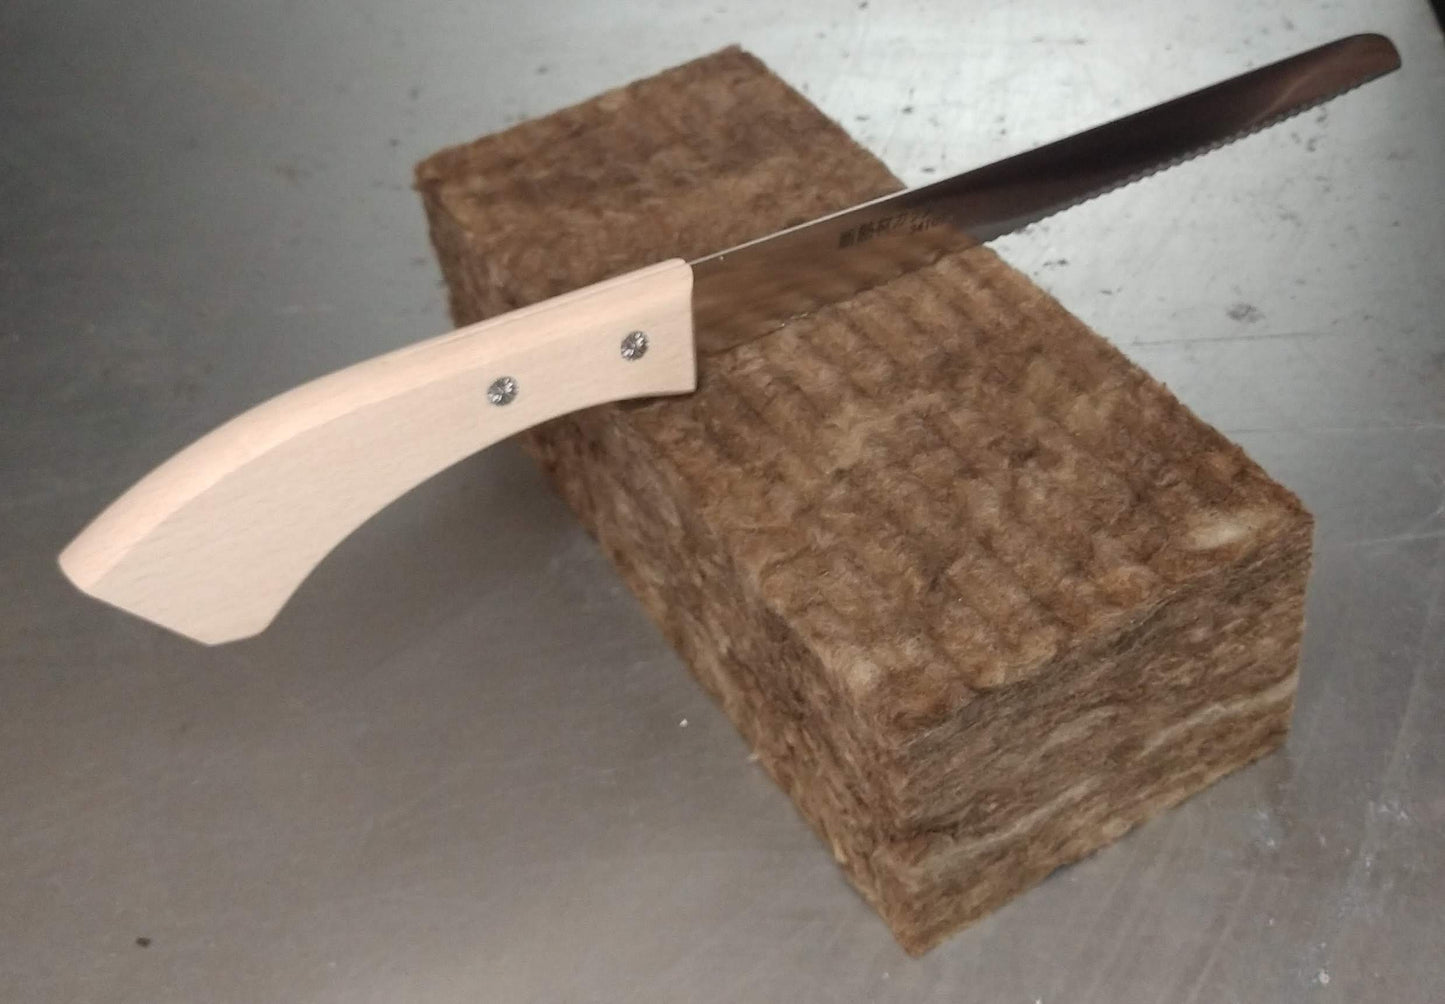 Sideau AgraWool® Knife 8 inch